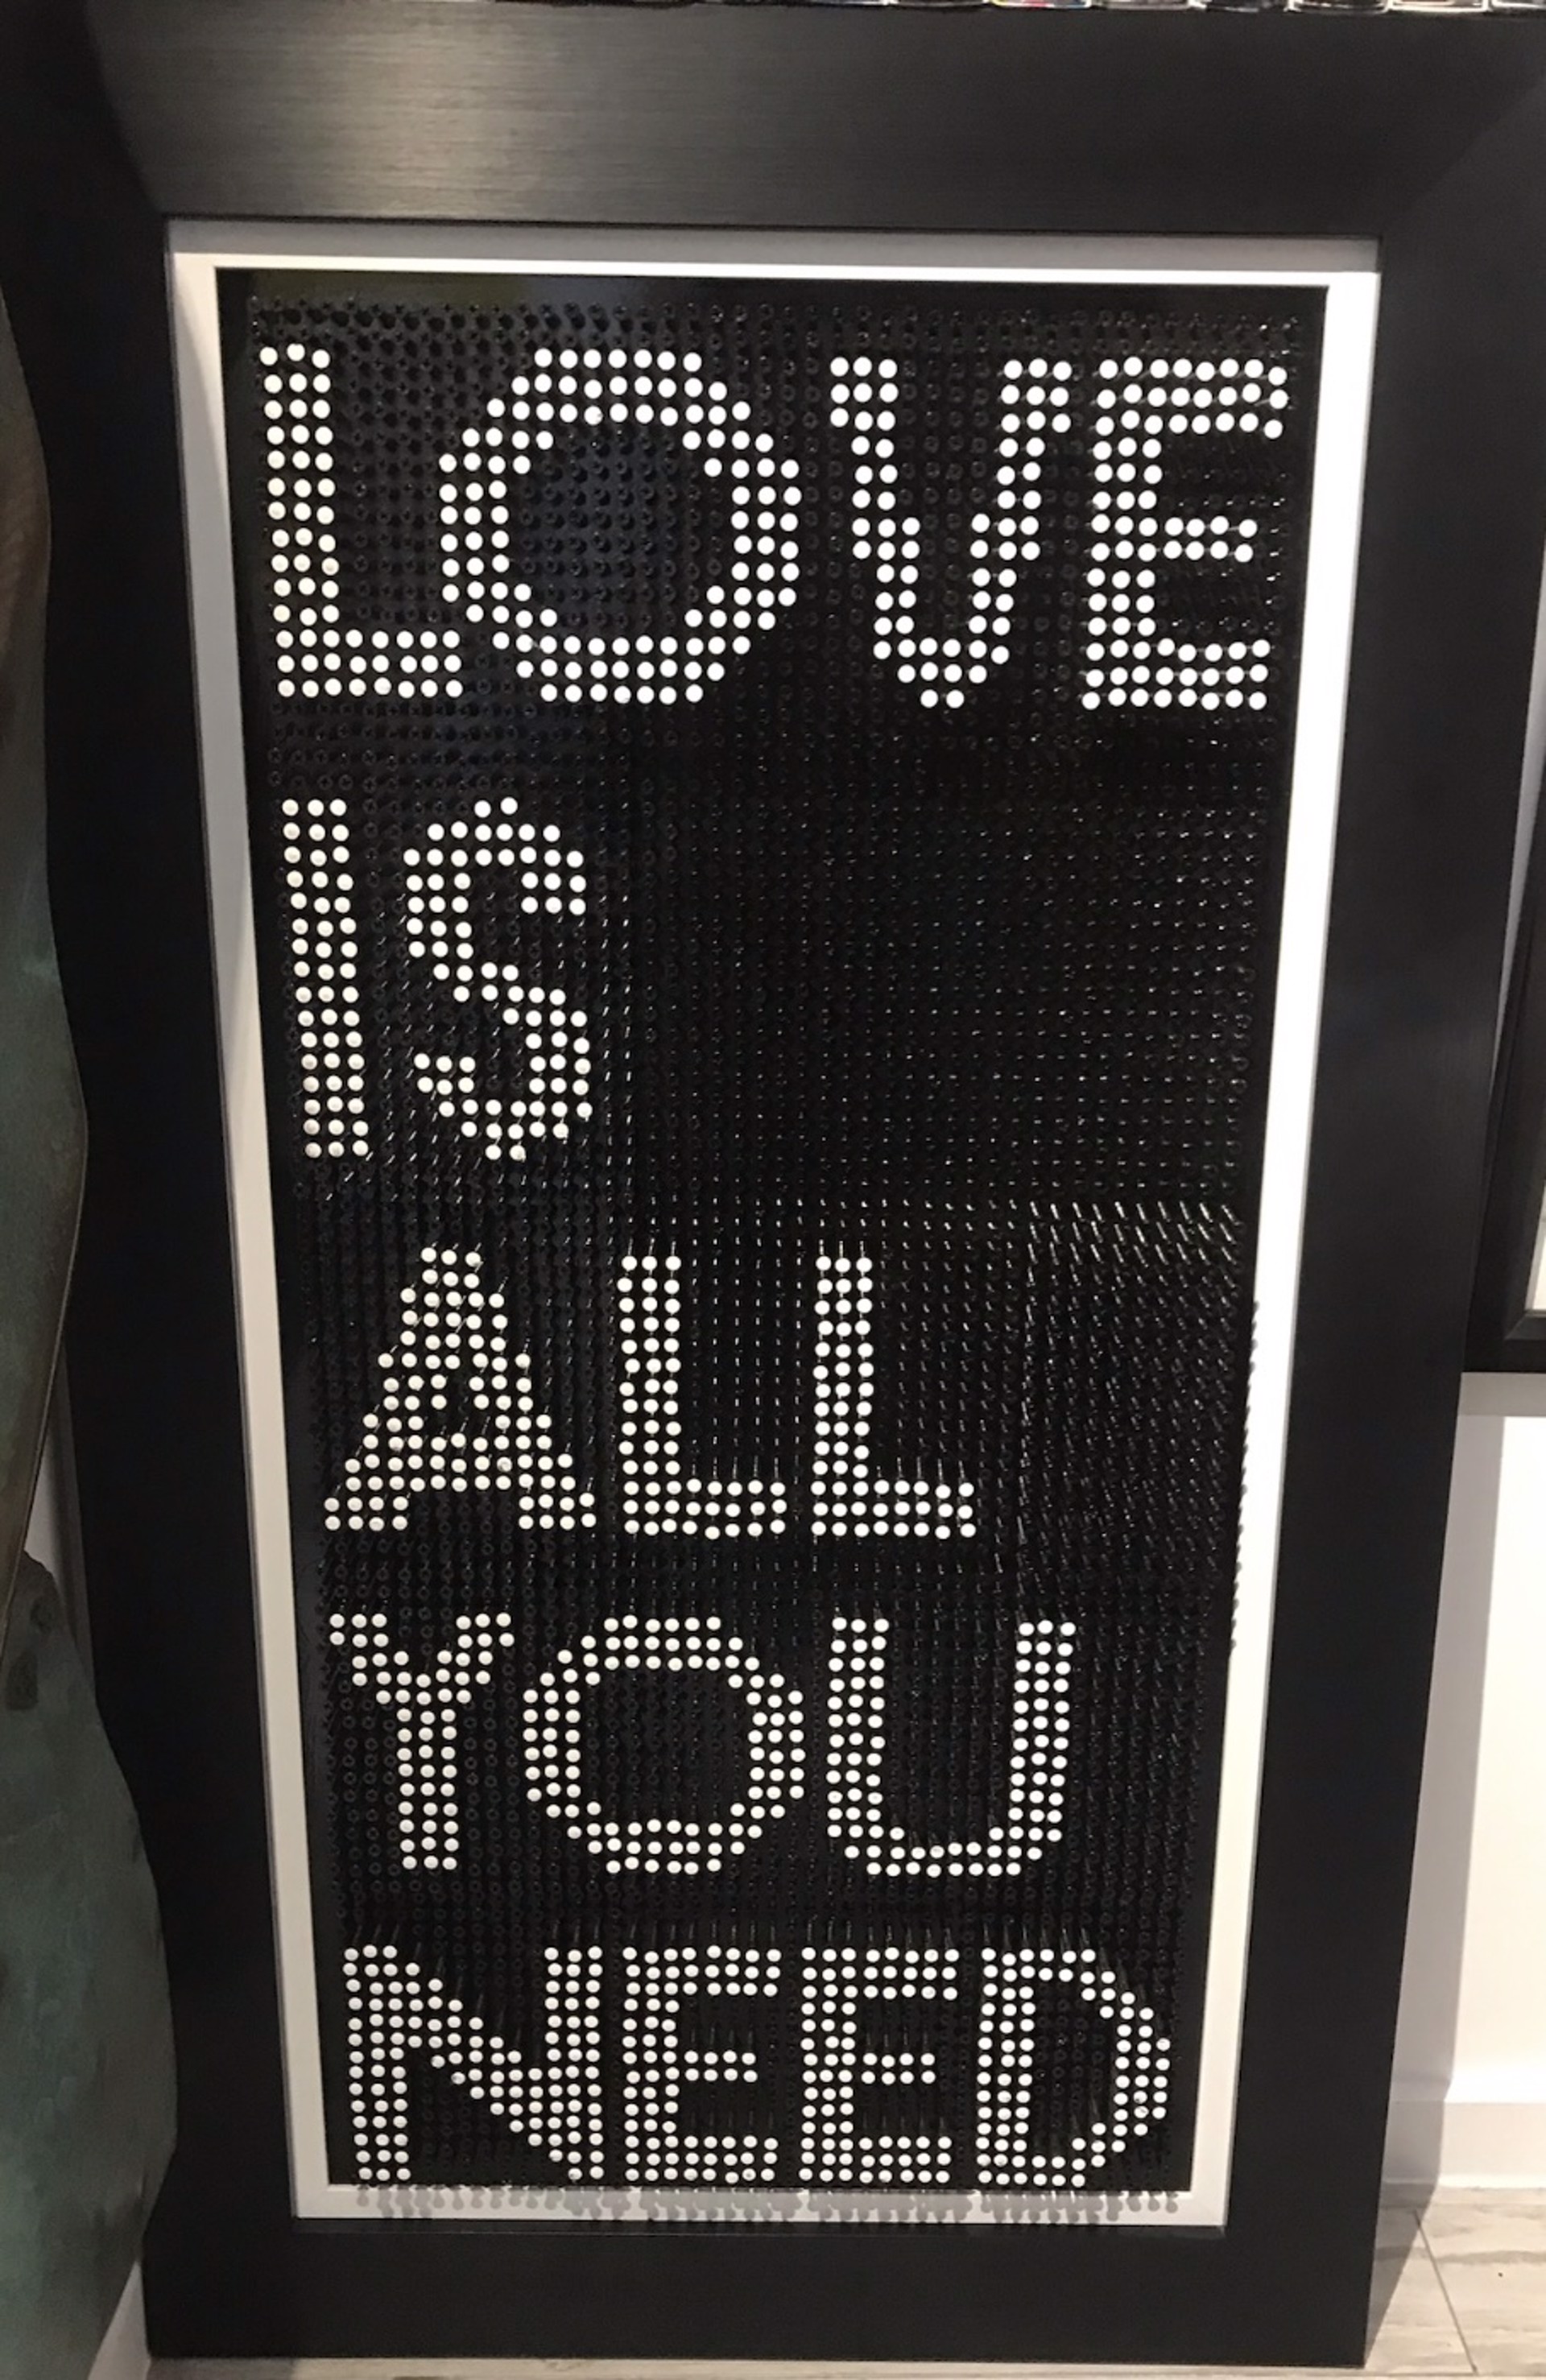 Black & White "All You Need Is Love" by Screw Art Board by Efi Mashiah